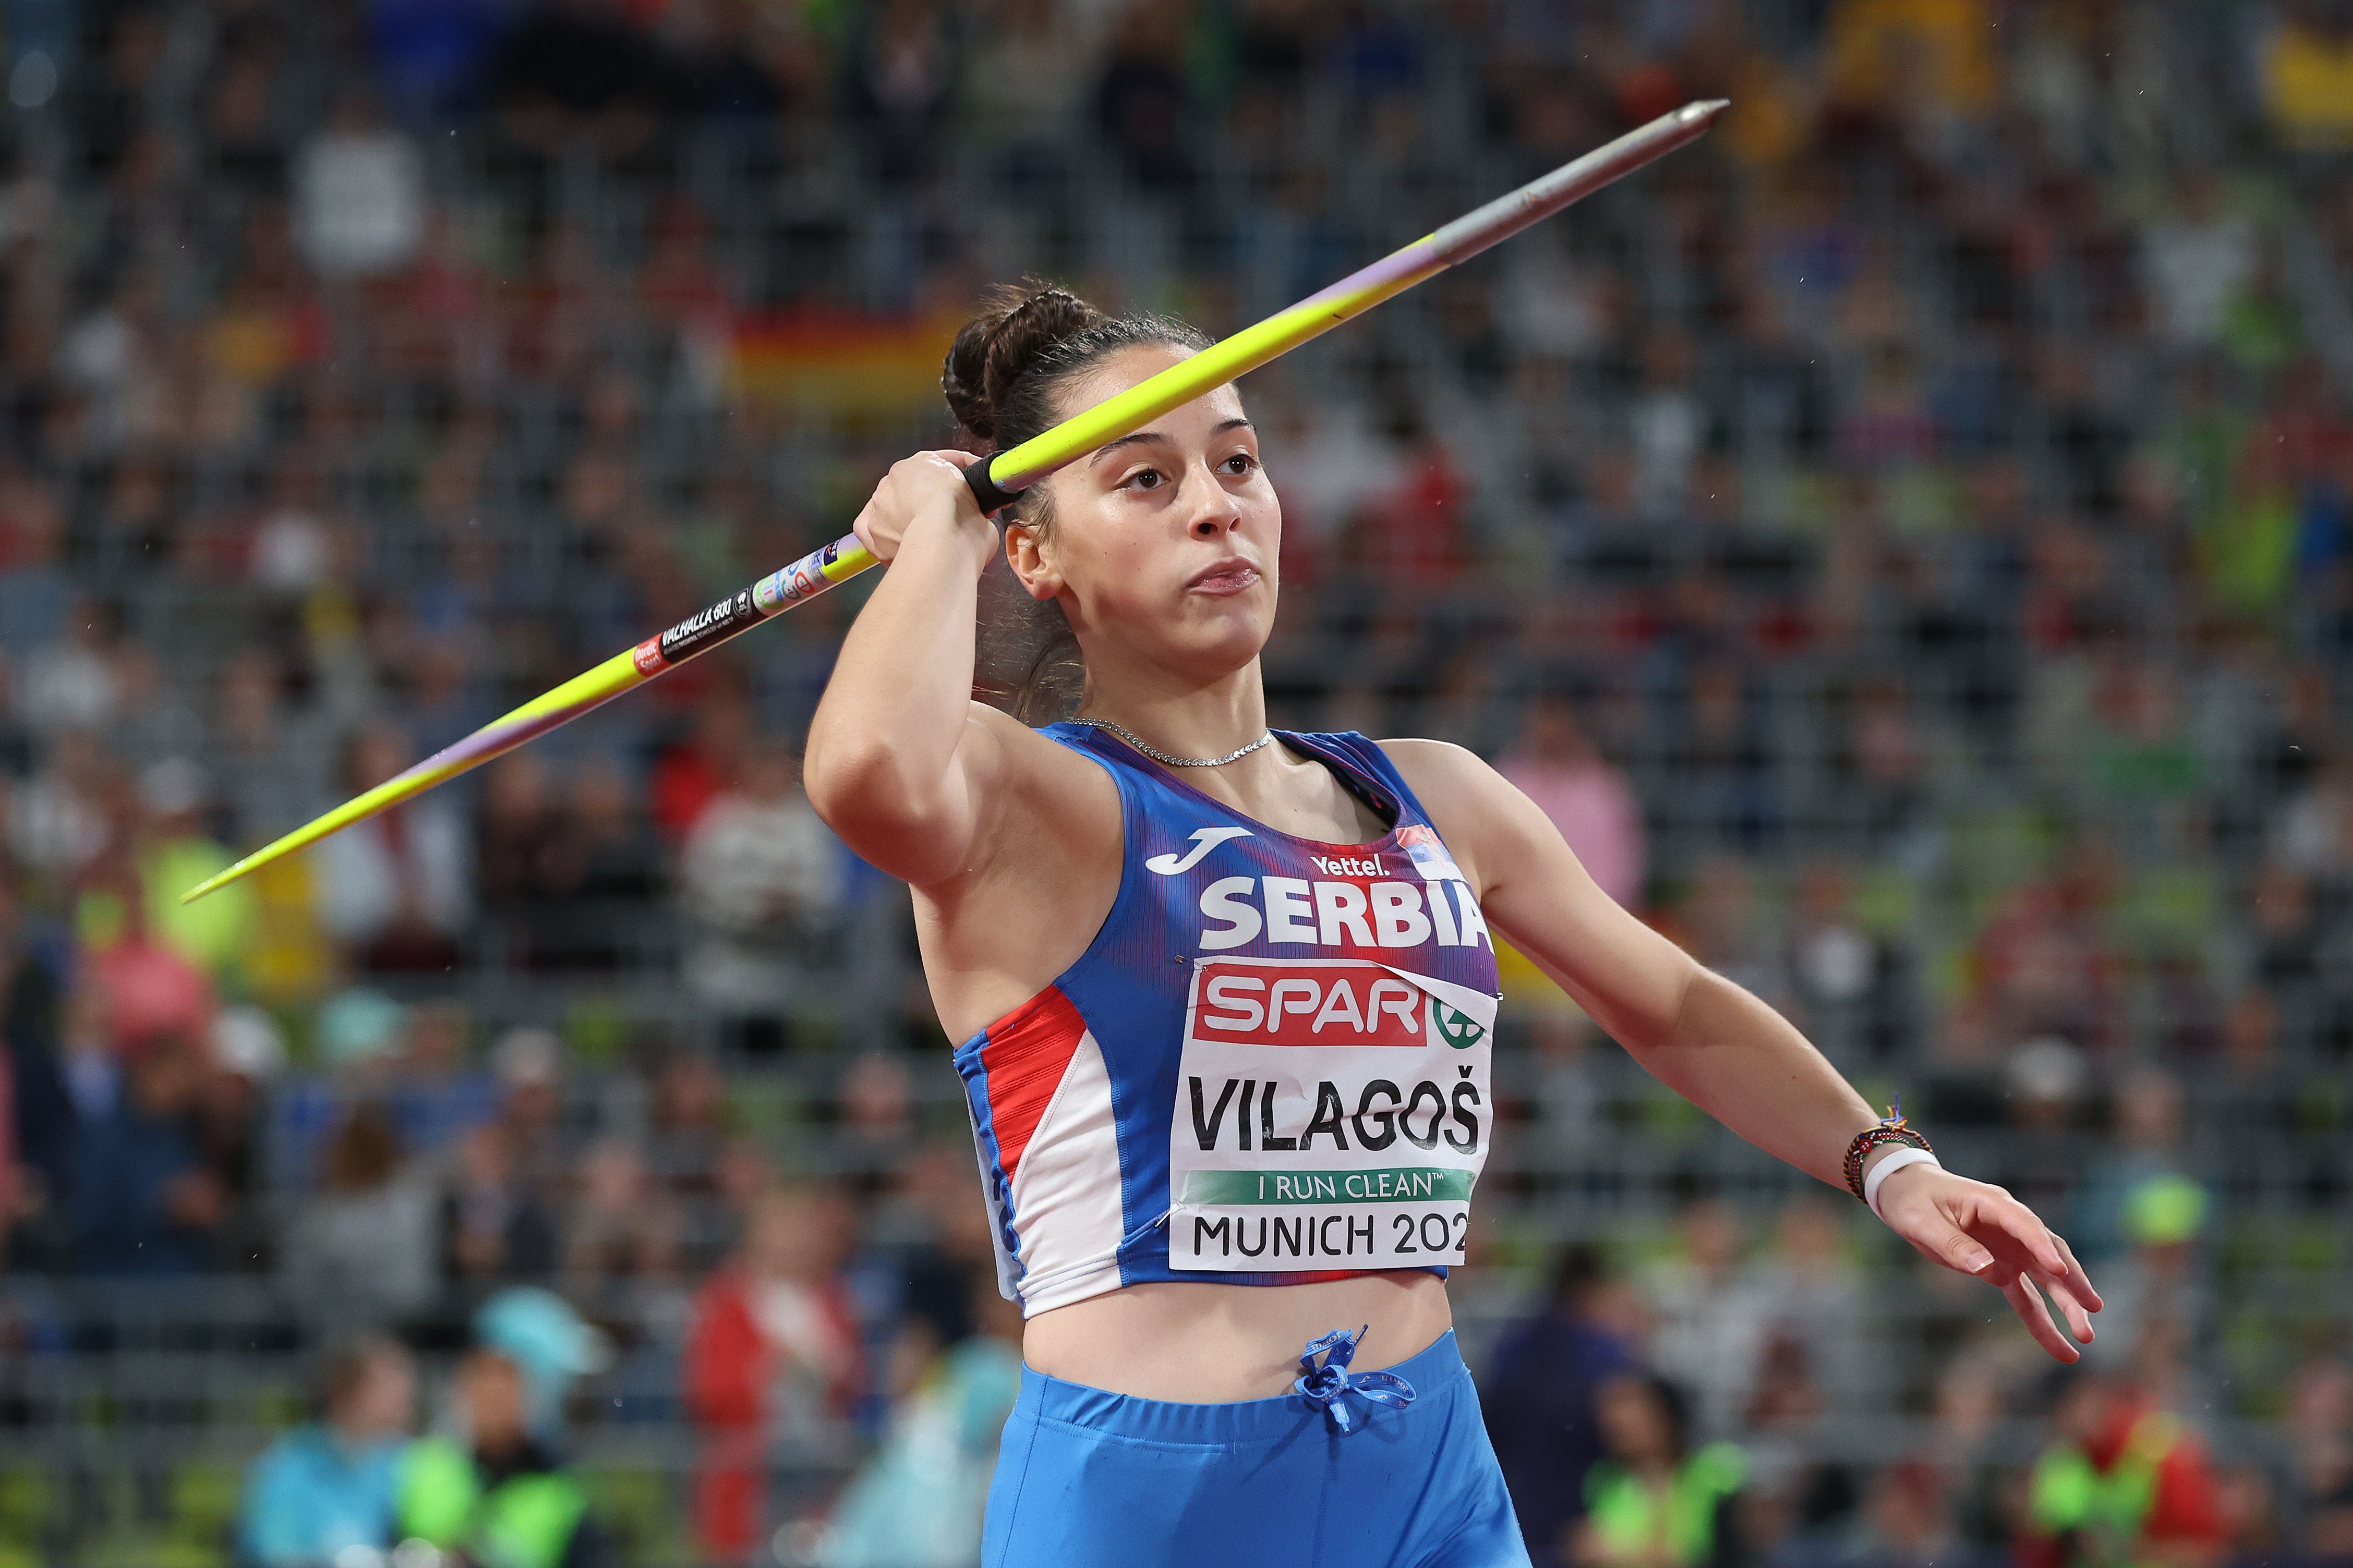 Adriana Vilagos at the European Championships